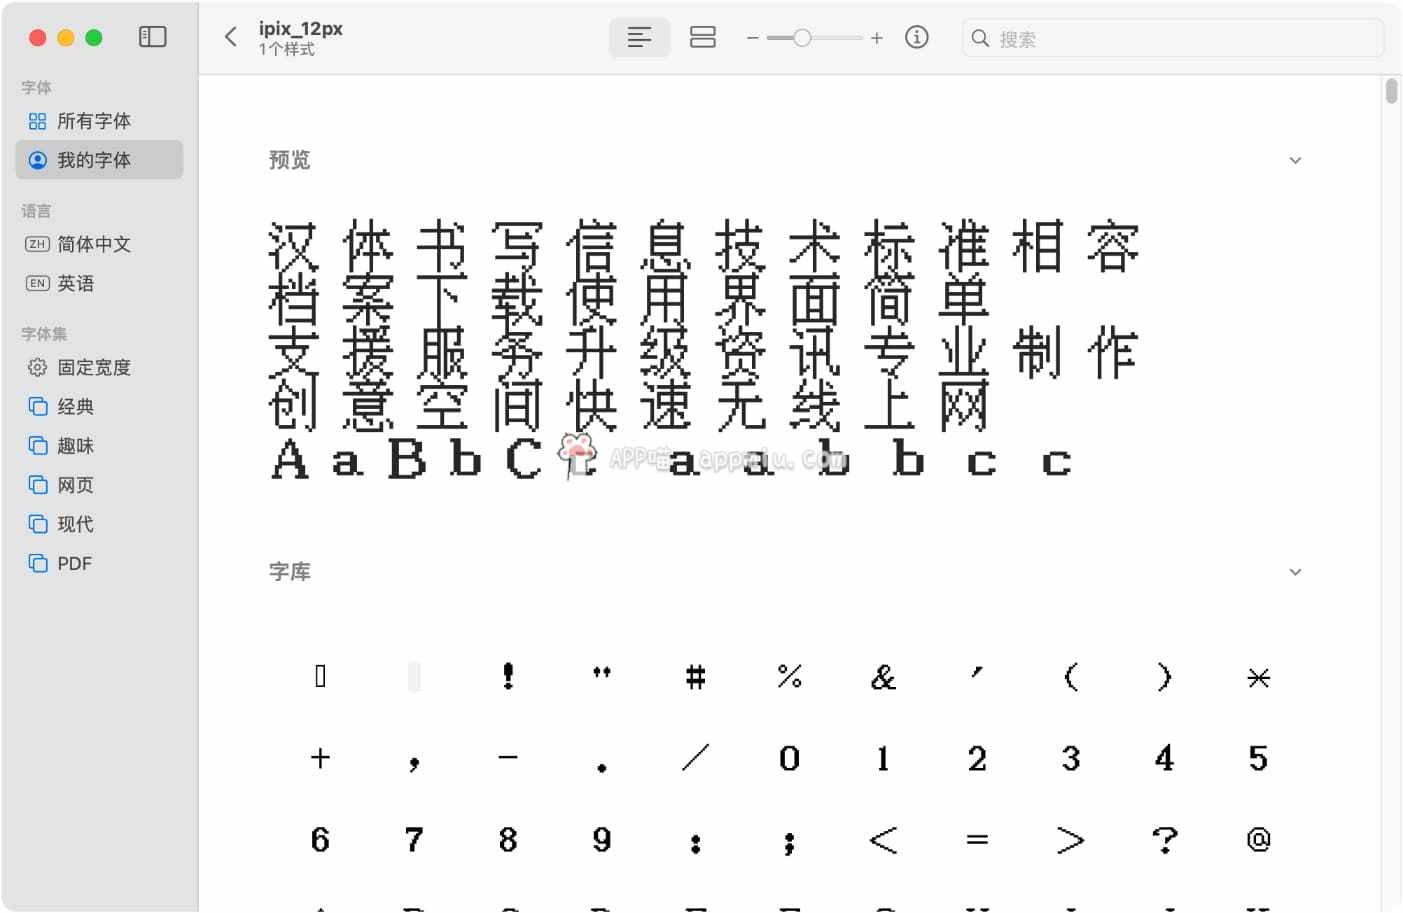 IPix(Chinese Pixel Font/ 中文像素字体)不可免费商用，注意！-APP喵：阿喵软件资源分享